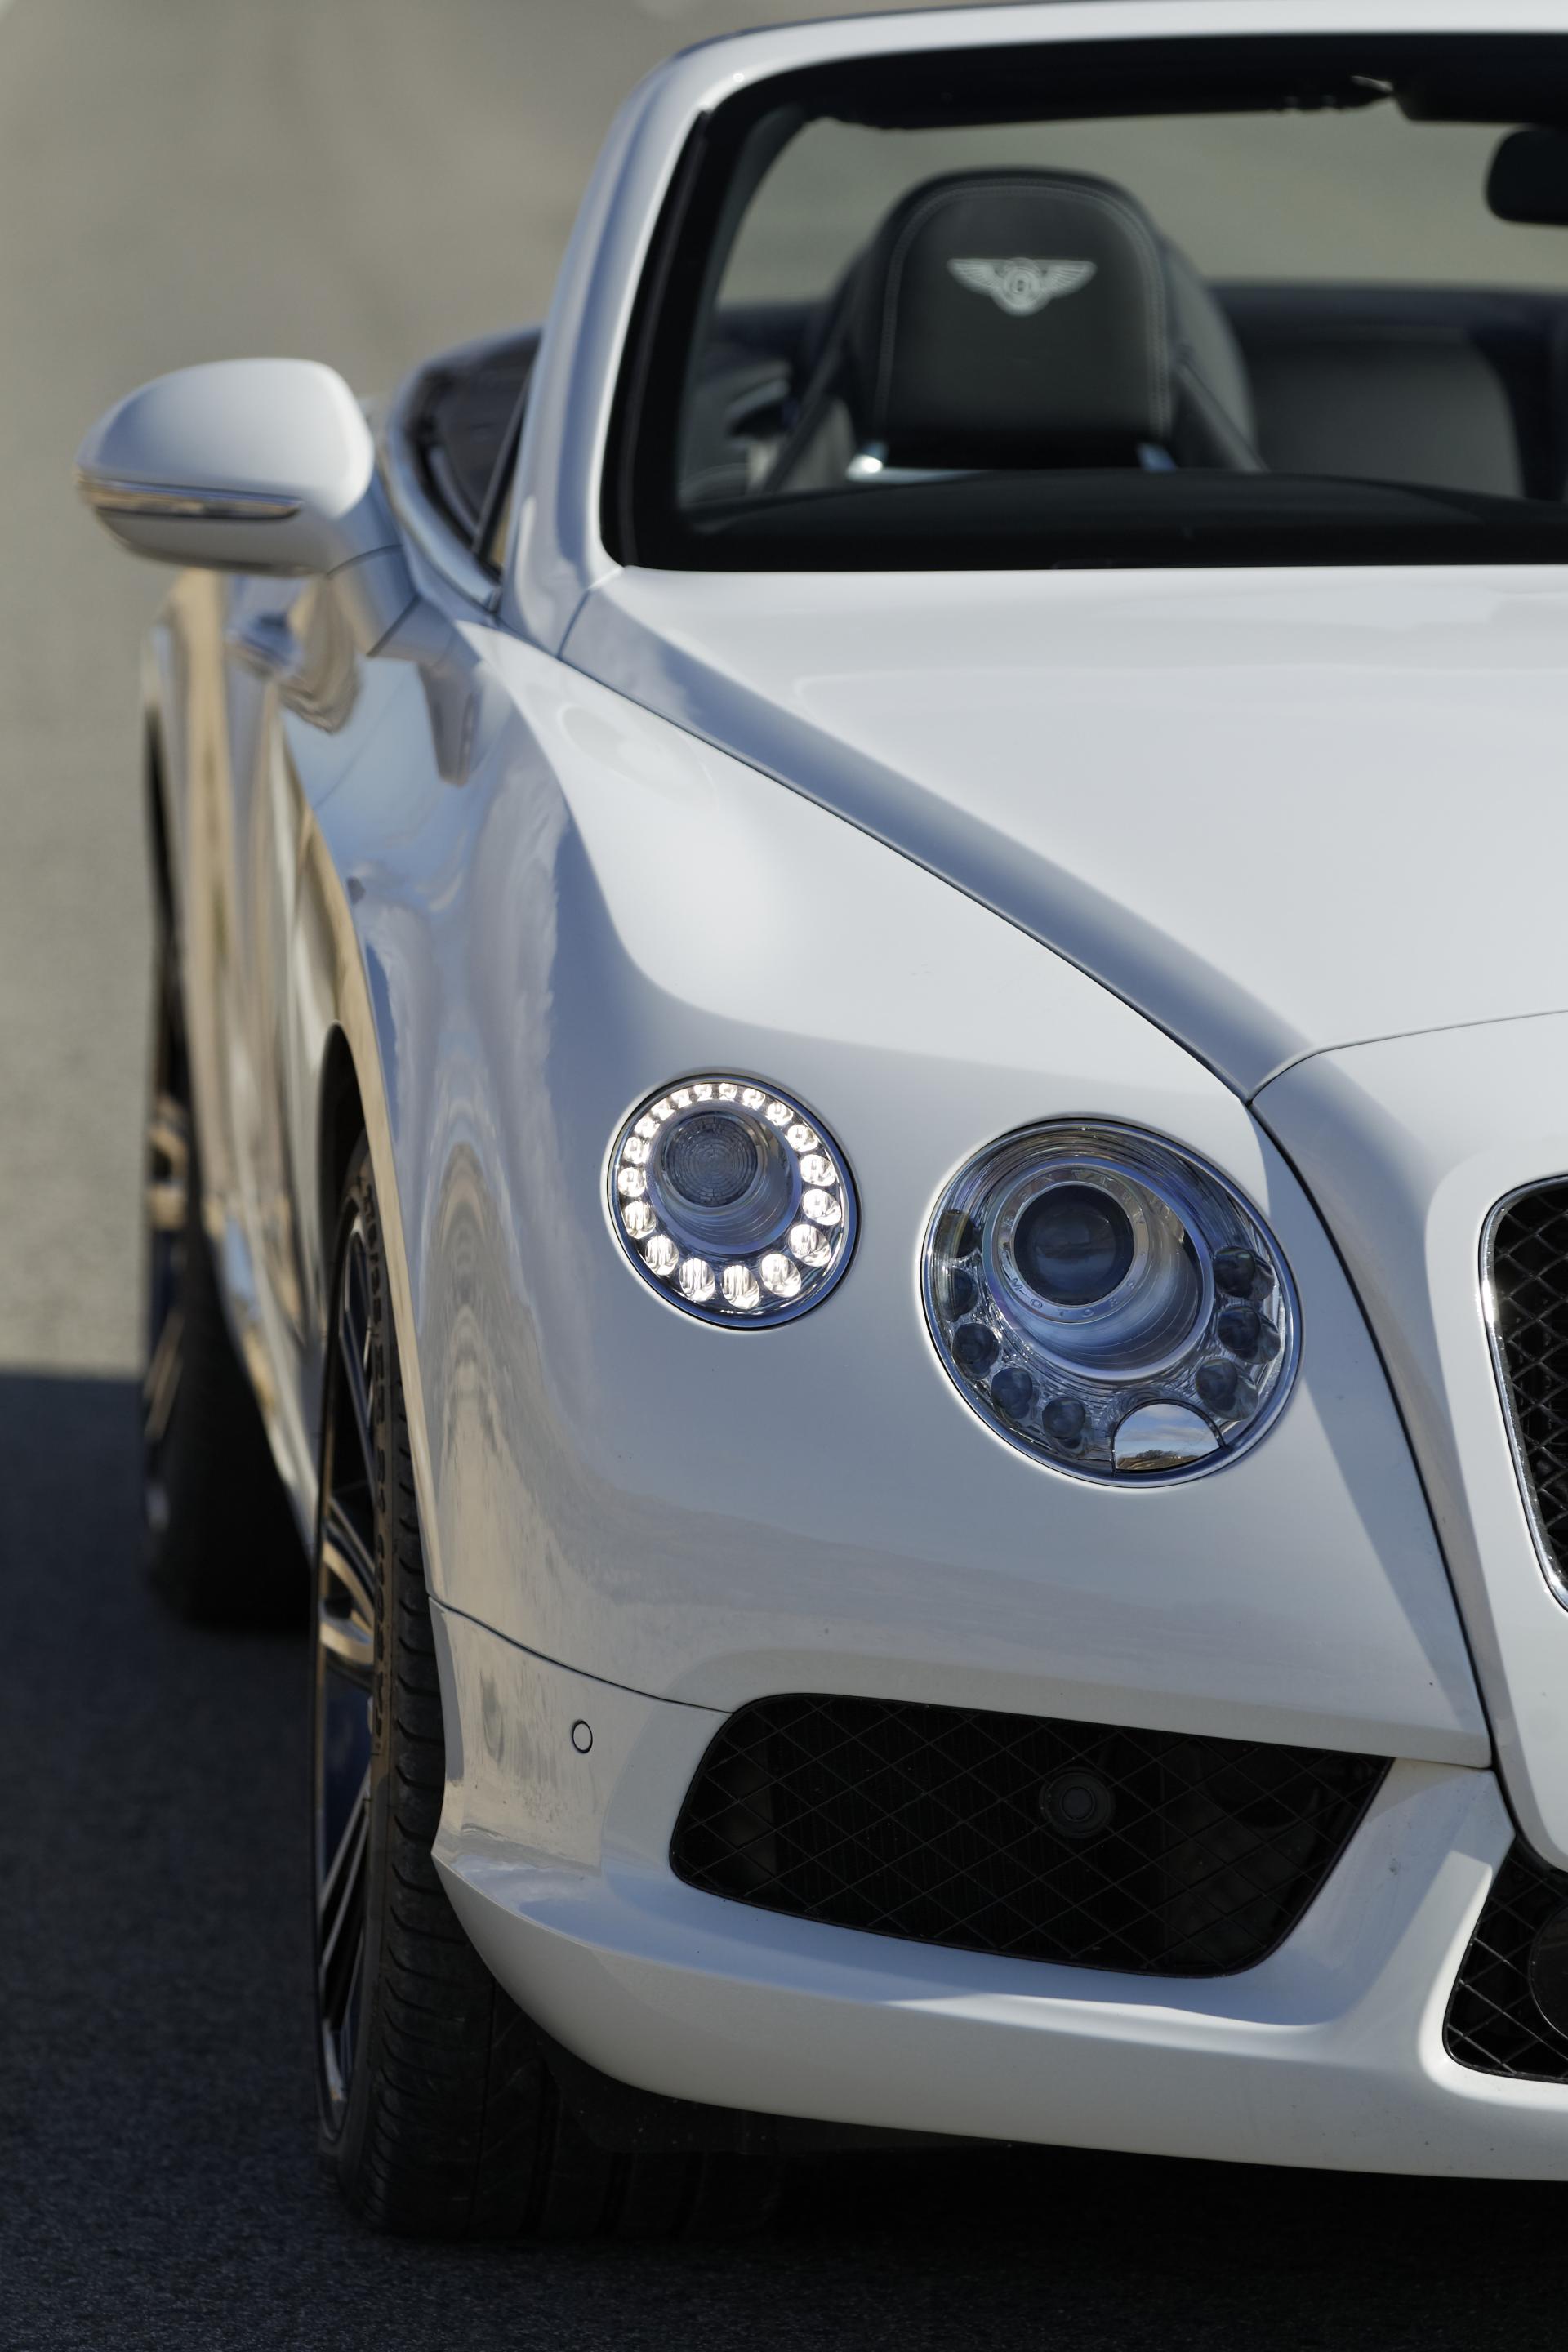 Bentley Gtc Glacier White Cabriolet Sportcar - Bentley Car Hd Wallpapers For Mobile , HD Wallpaper & Backgrounds